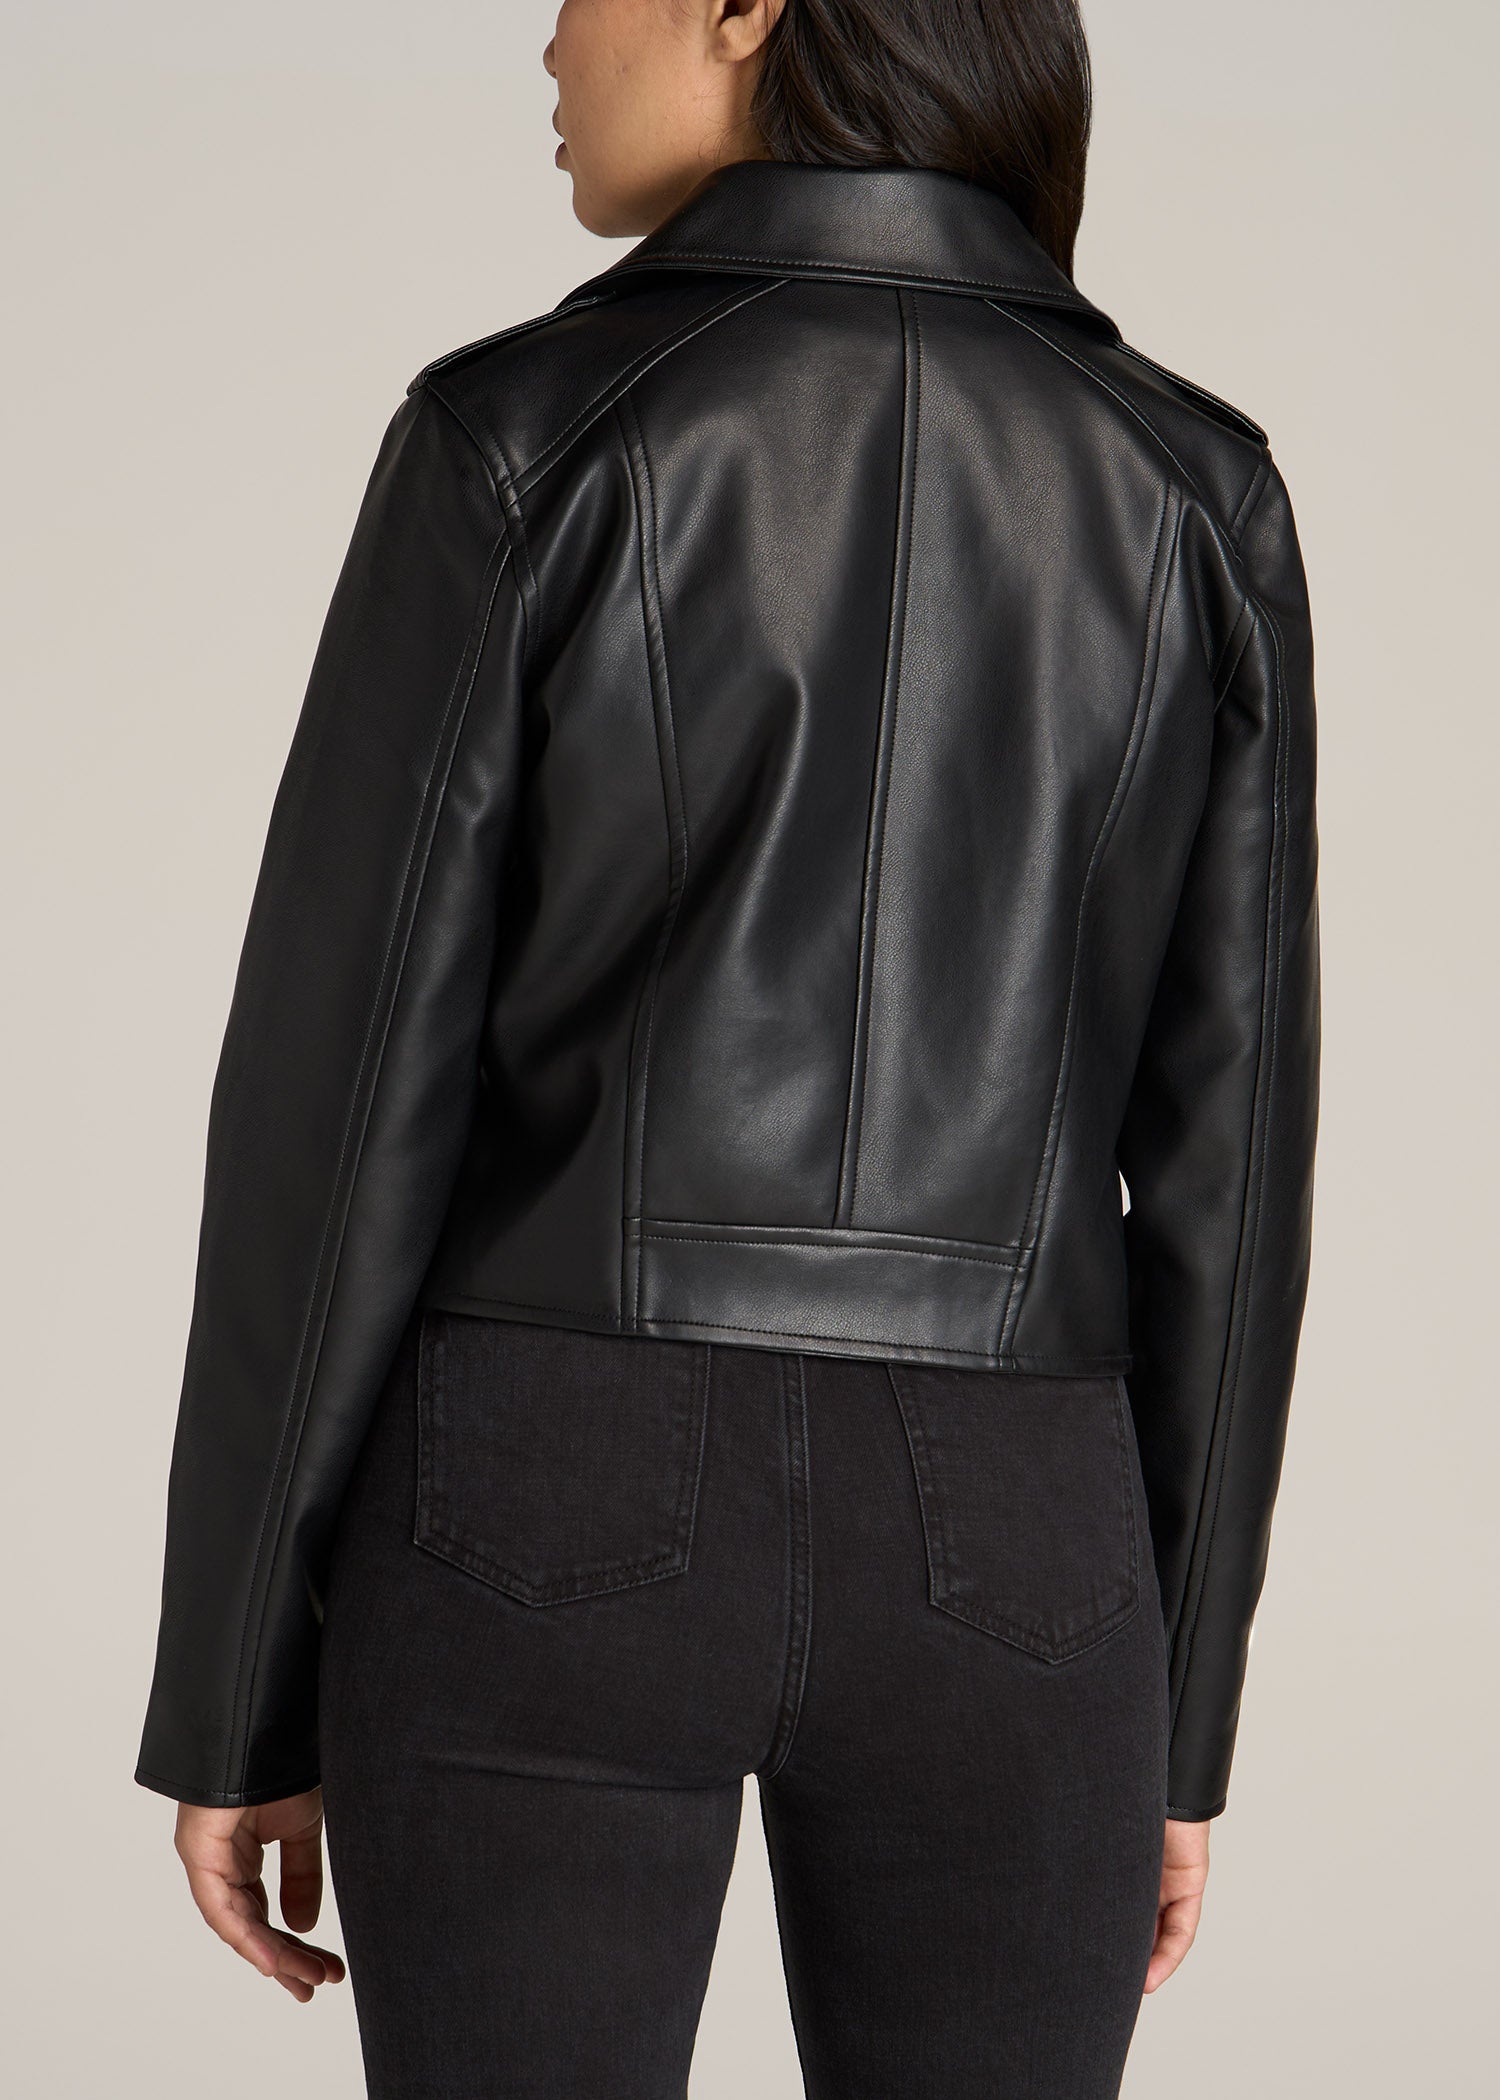 American-Tall-Women-Faux-Leather-Moto-Jacket-Black-back